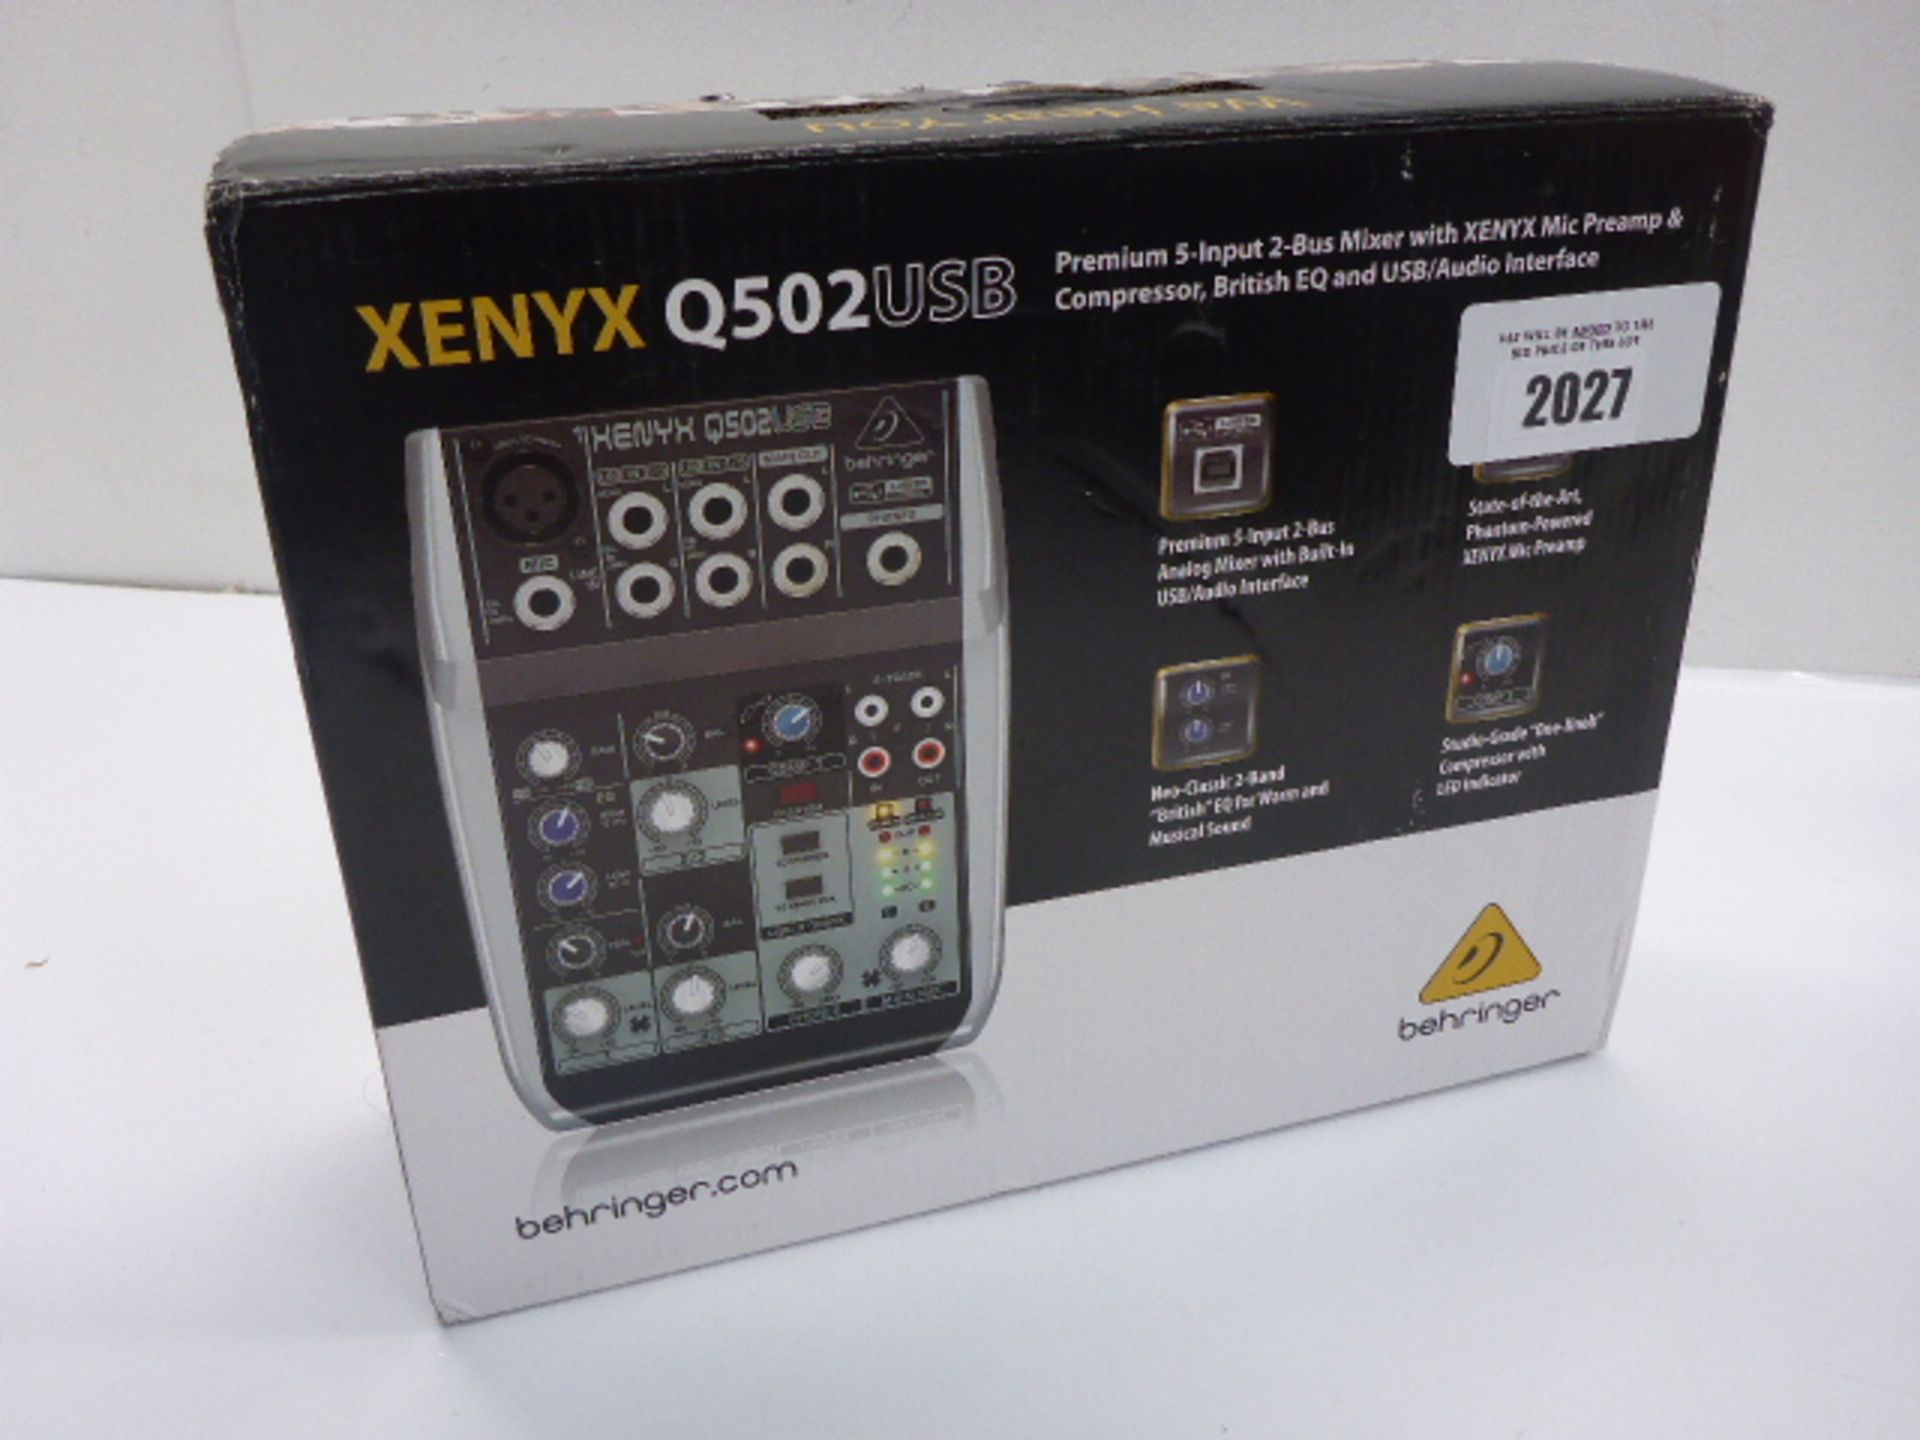 Behringer Xenyx Q502 usb 5 input 2 bus mixer boxed.